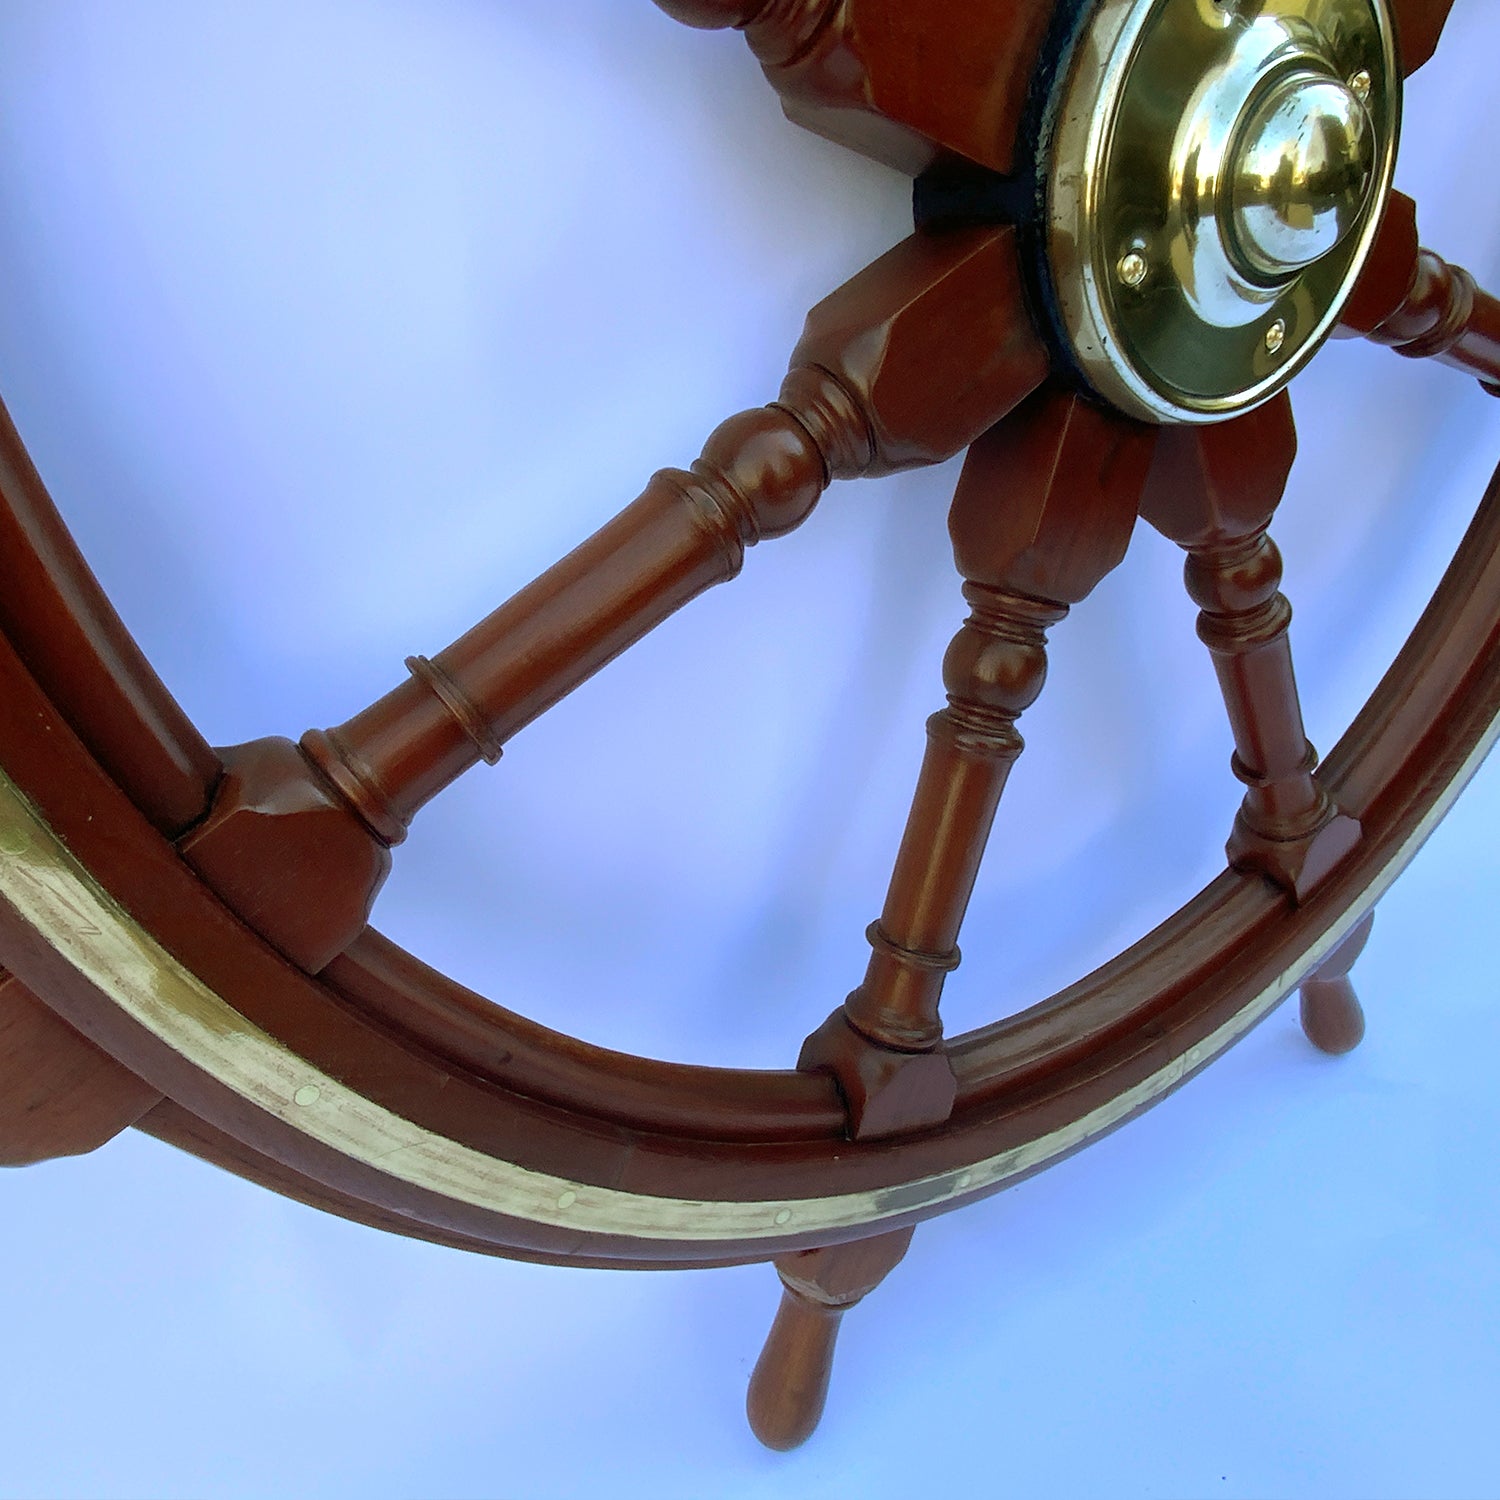 Mahogany And Brass Antique Ship's Wheel - Lannan Gallery